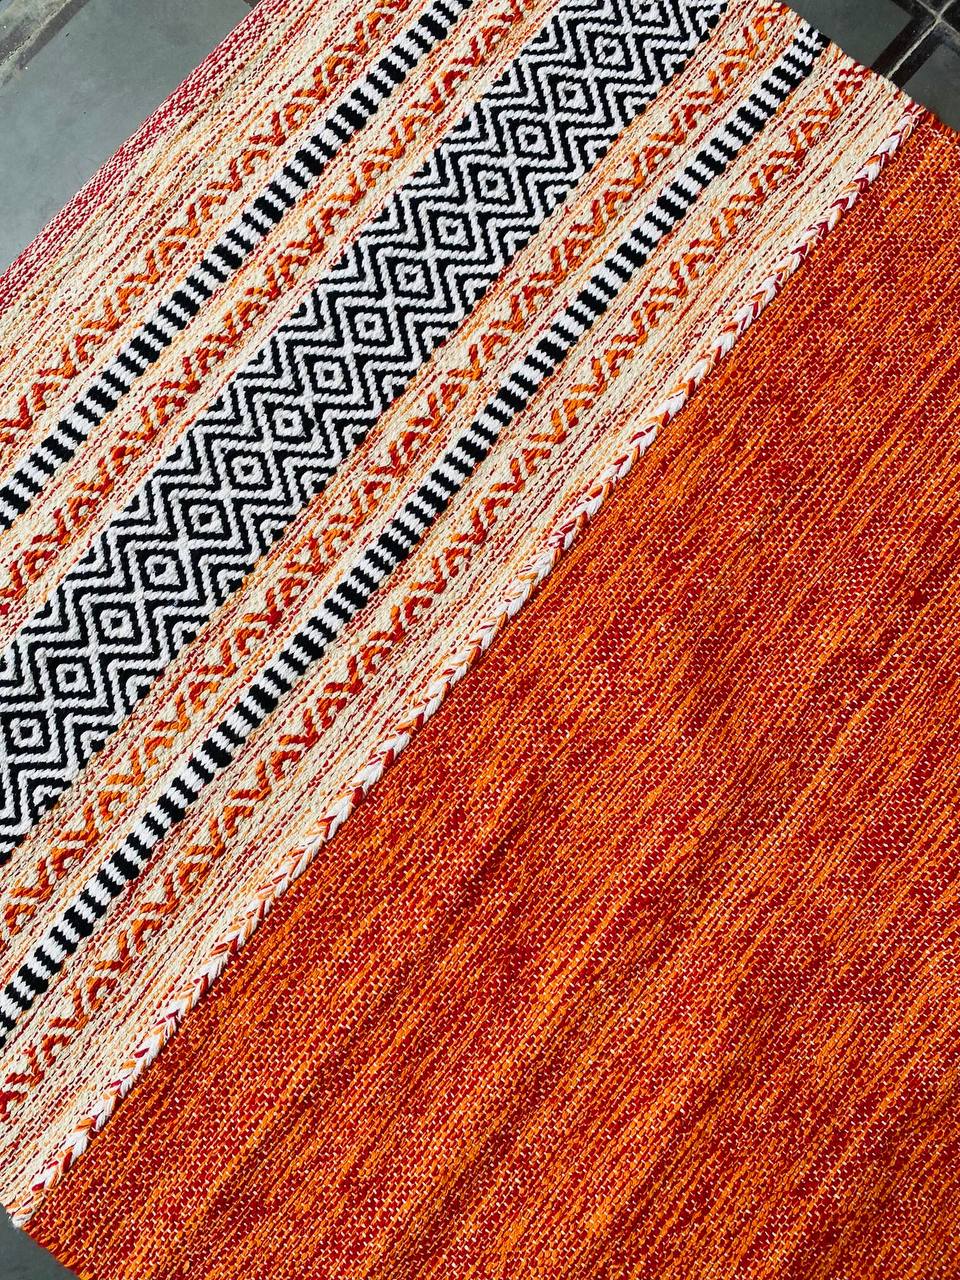 Tapete Kilim "Arte Textil" - Bordado a Mano (120cm x 180cm)